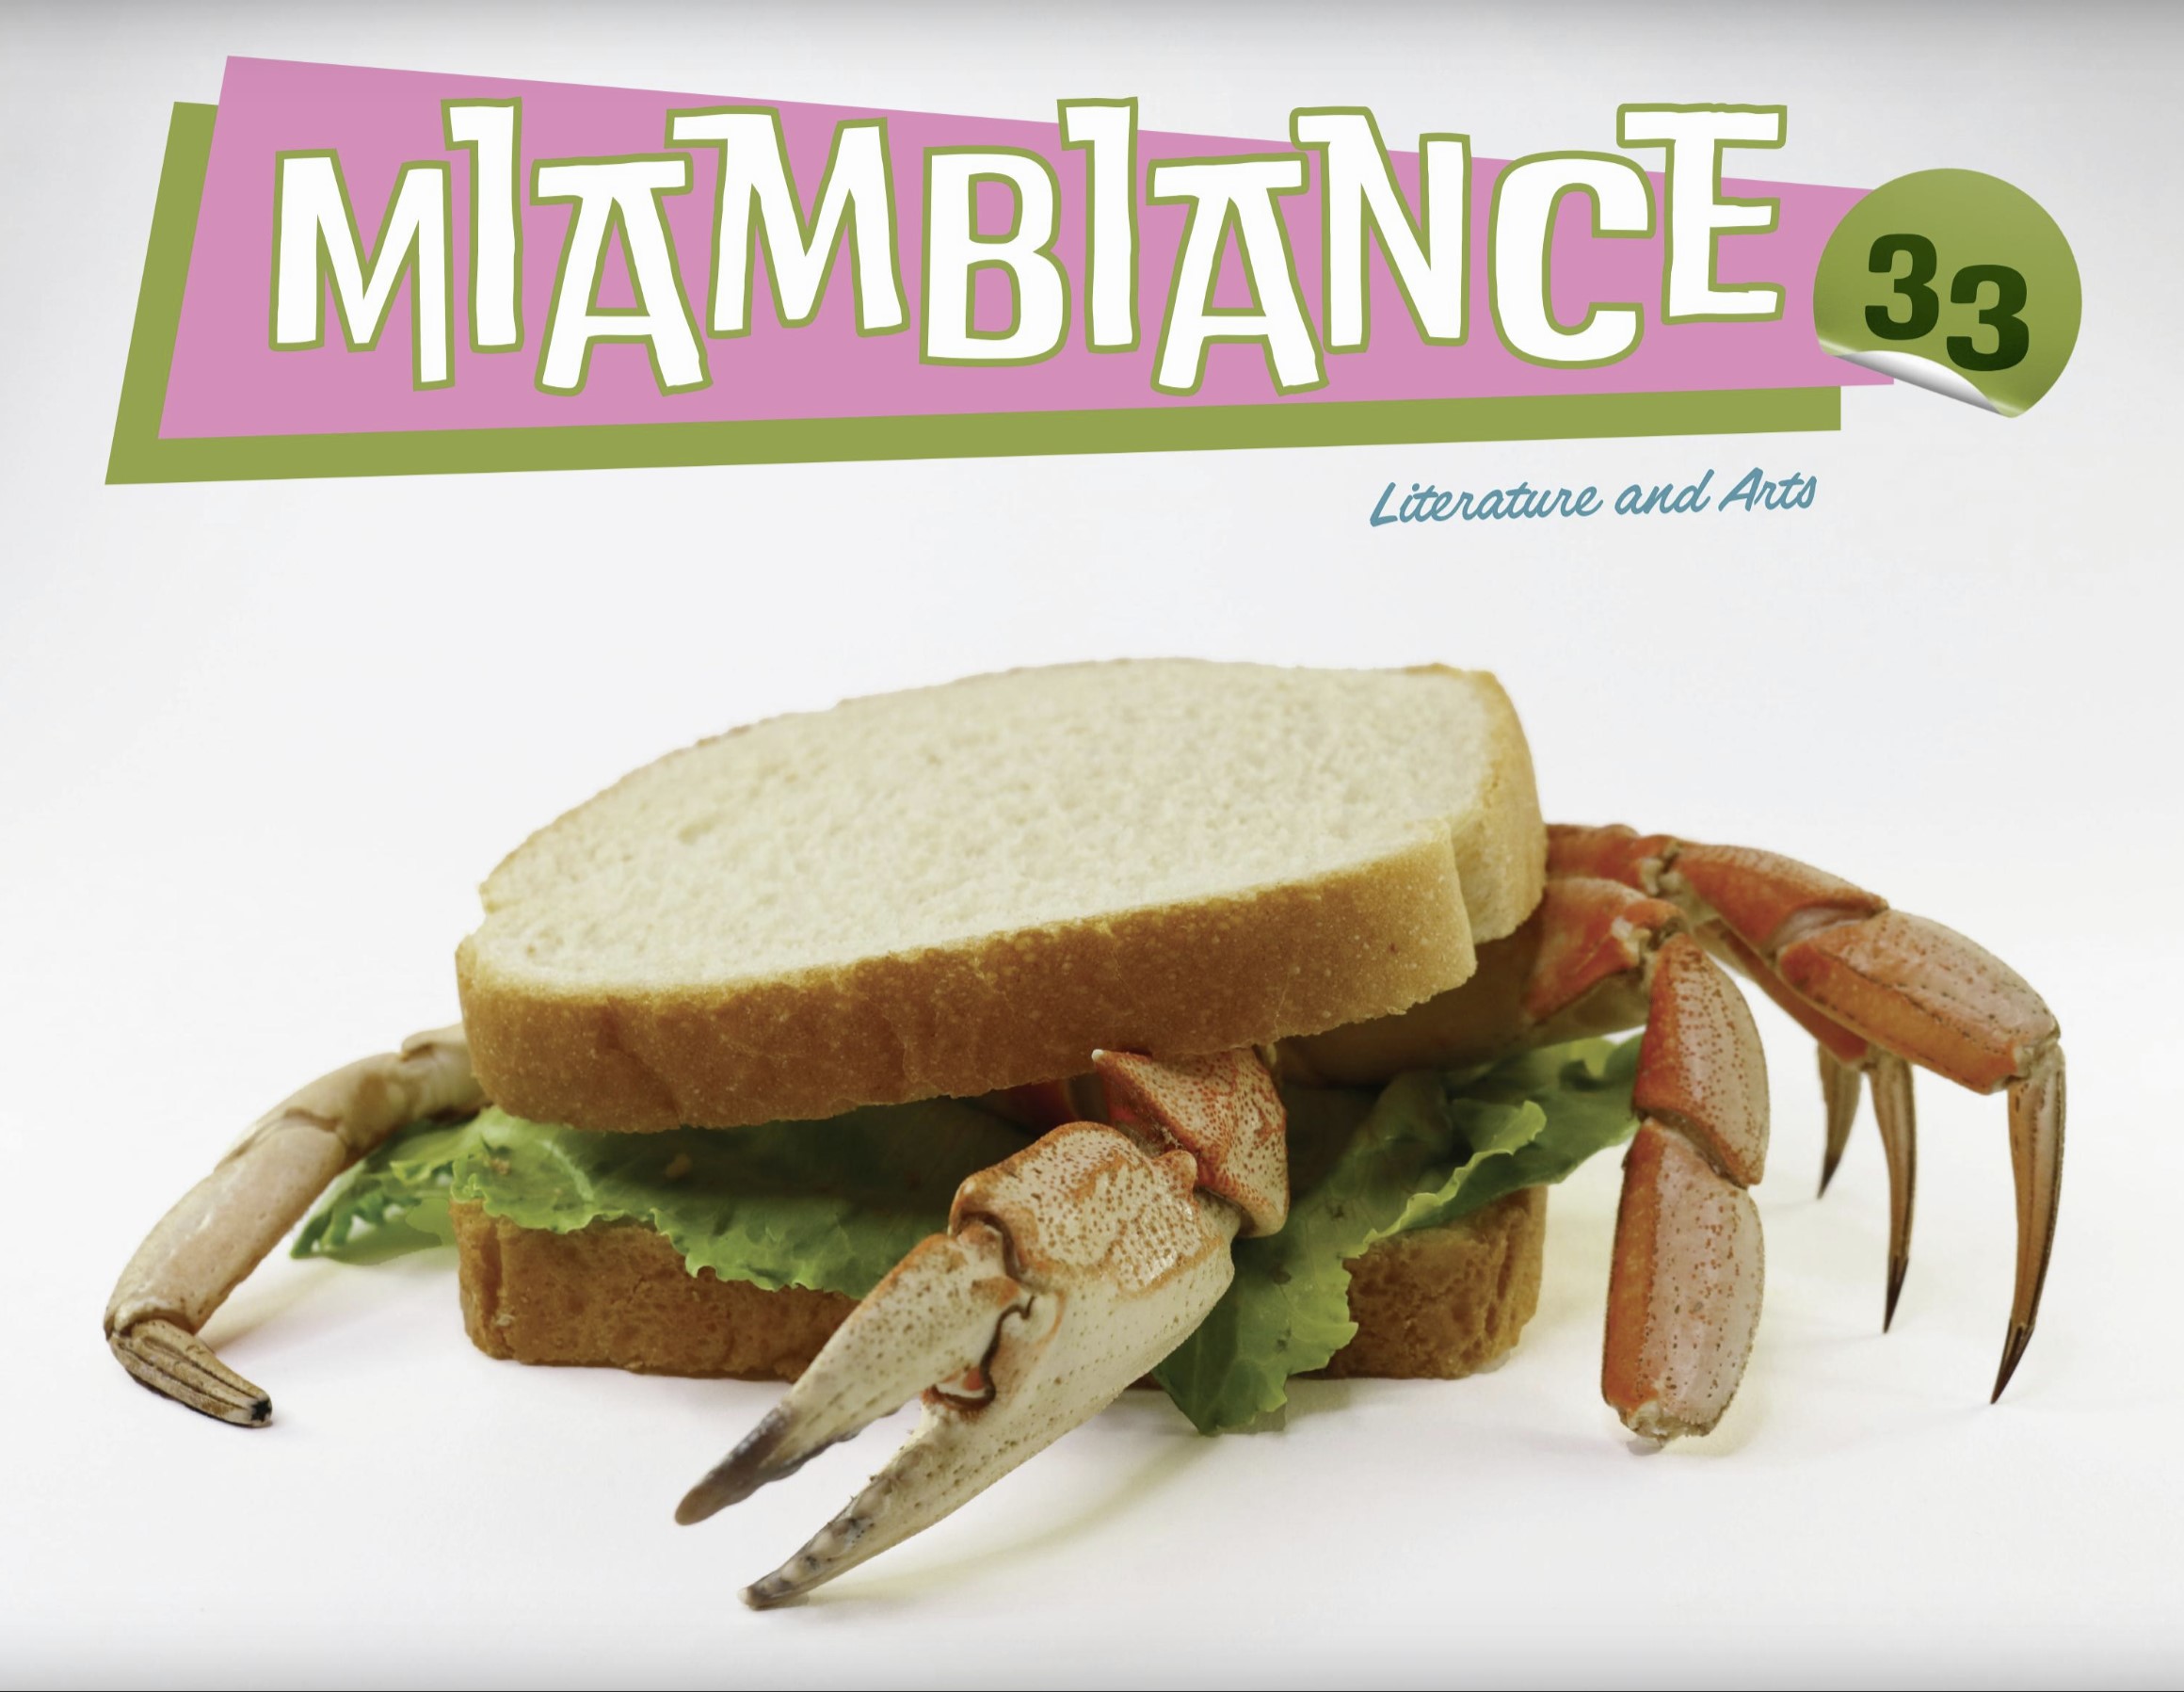 Crab in a Sandwich.